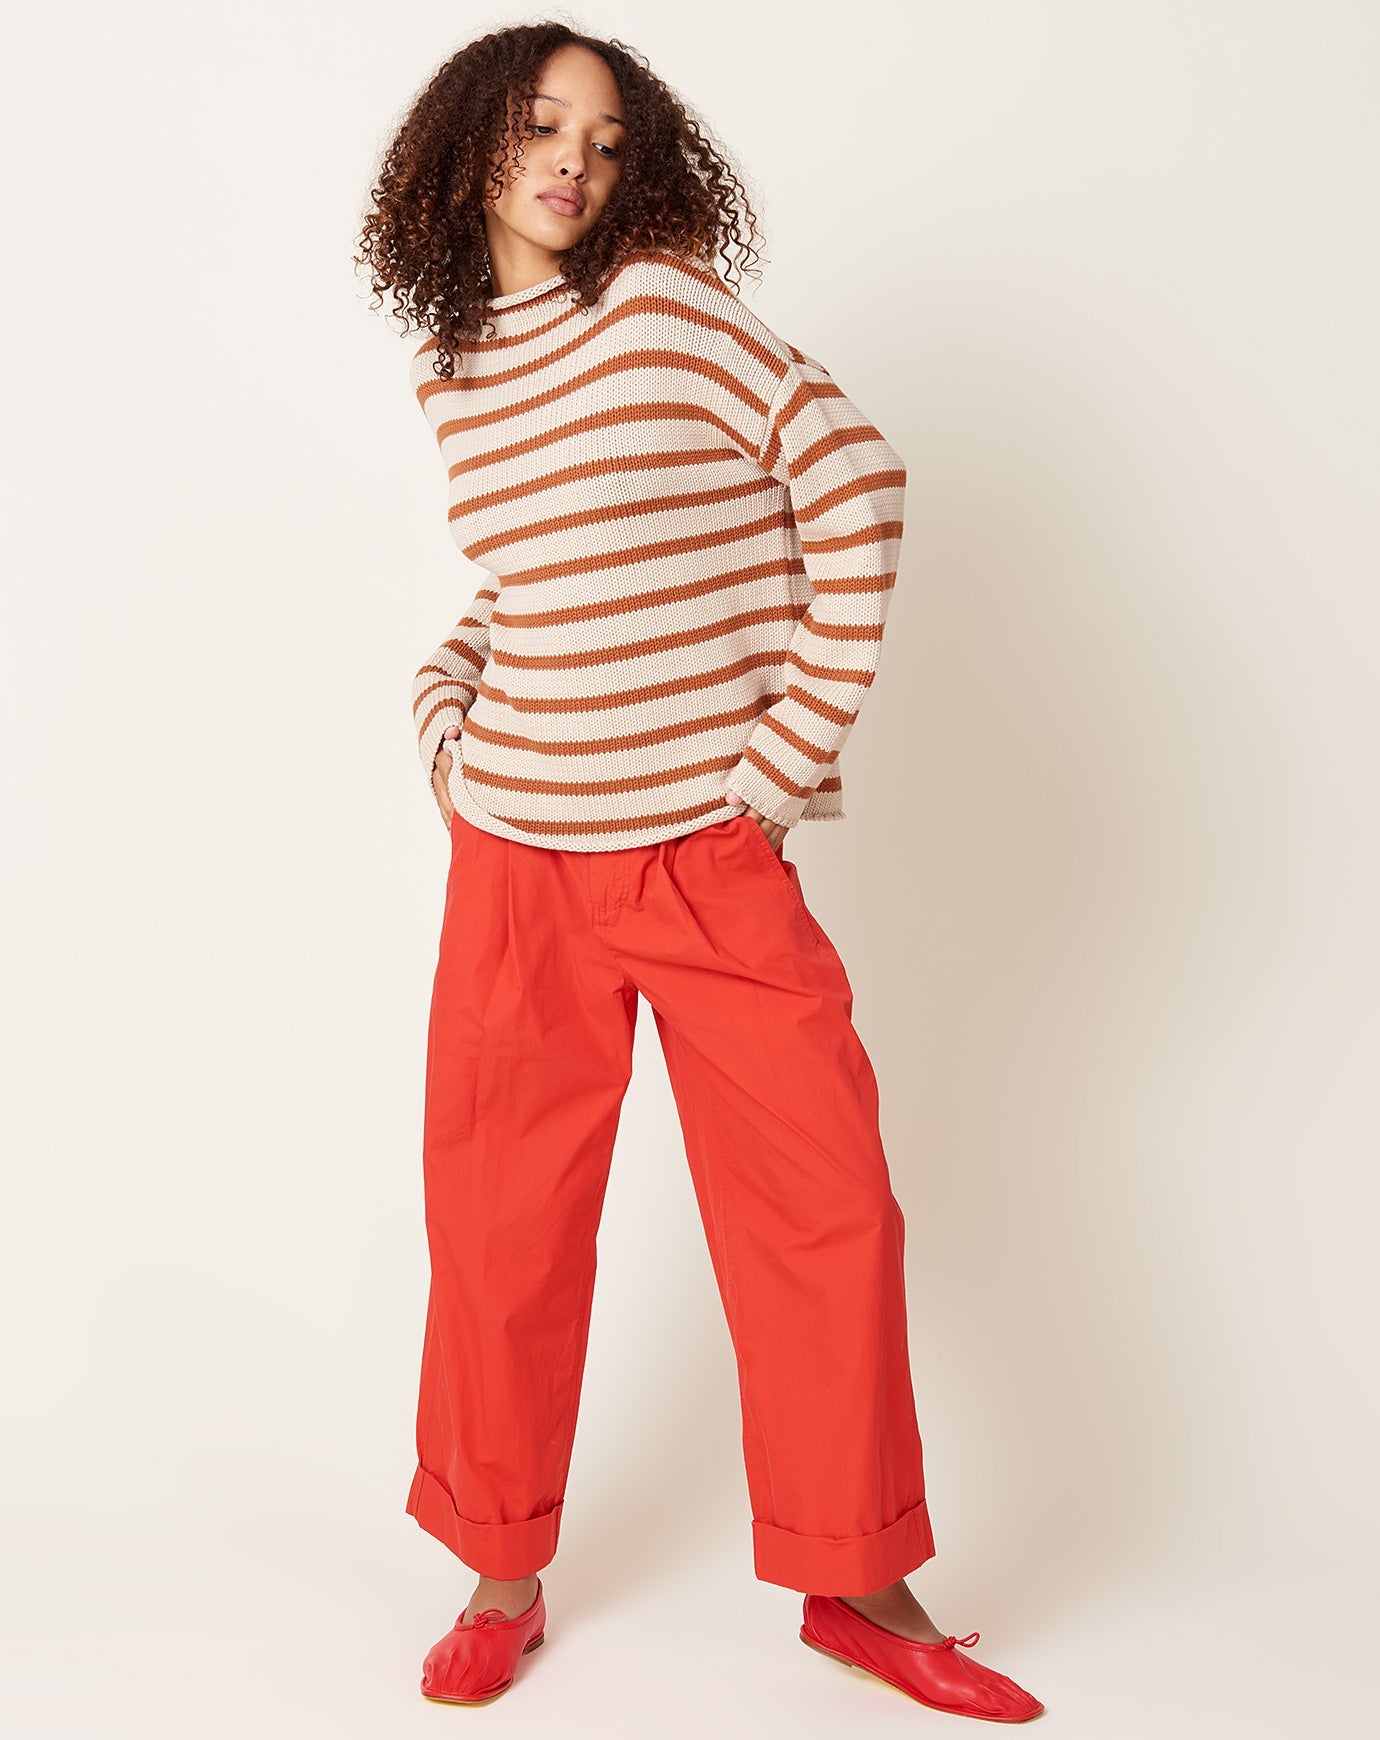 Demylee Lamis Stripe Sweater in Natural & Brown